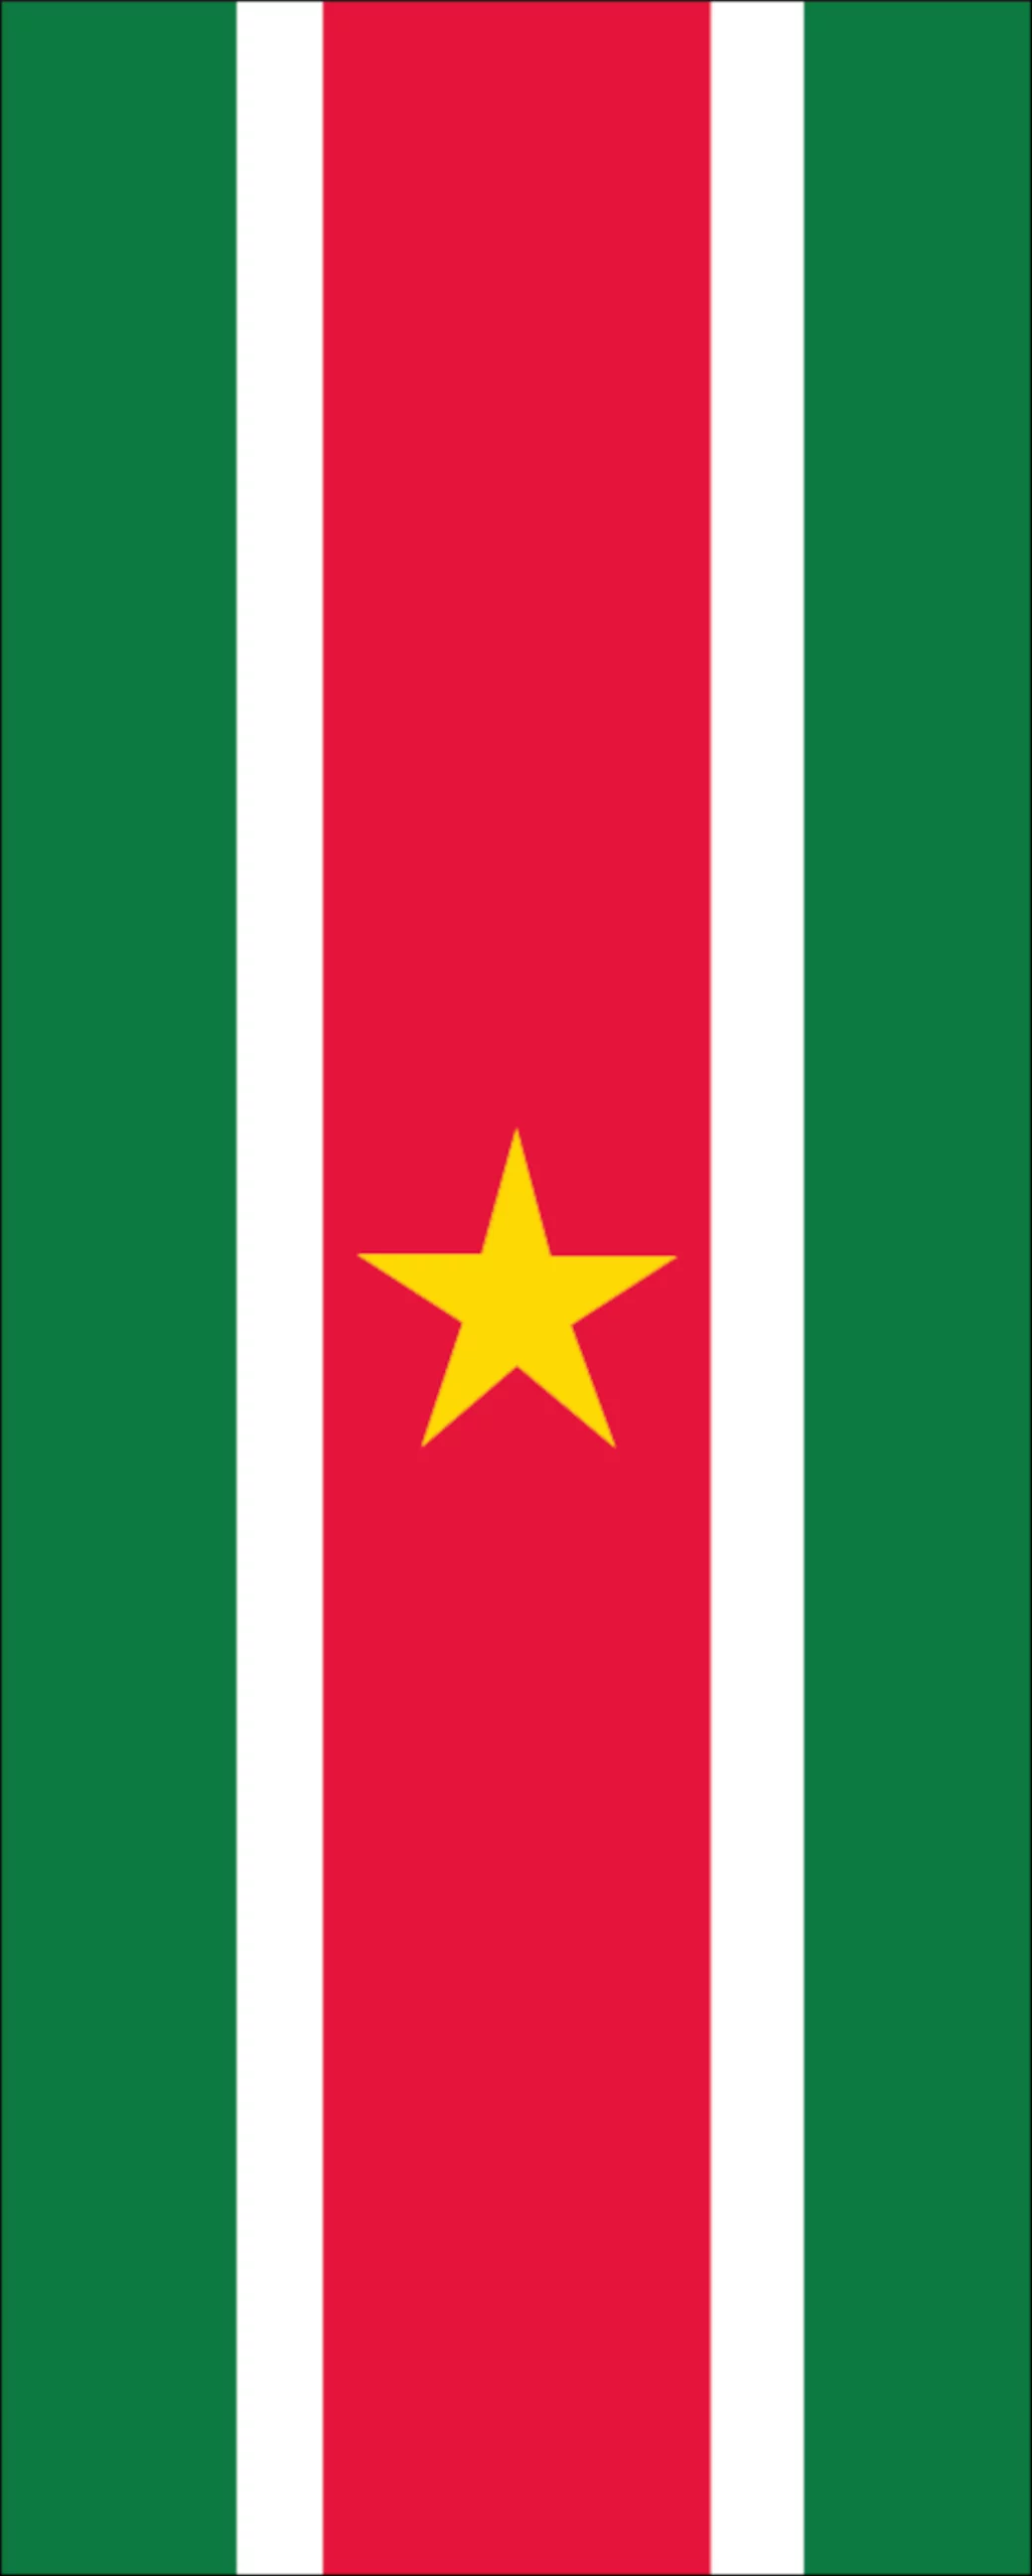 Flagge Surinam